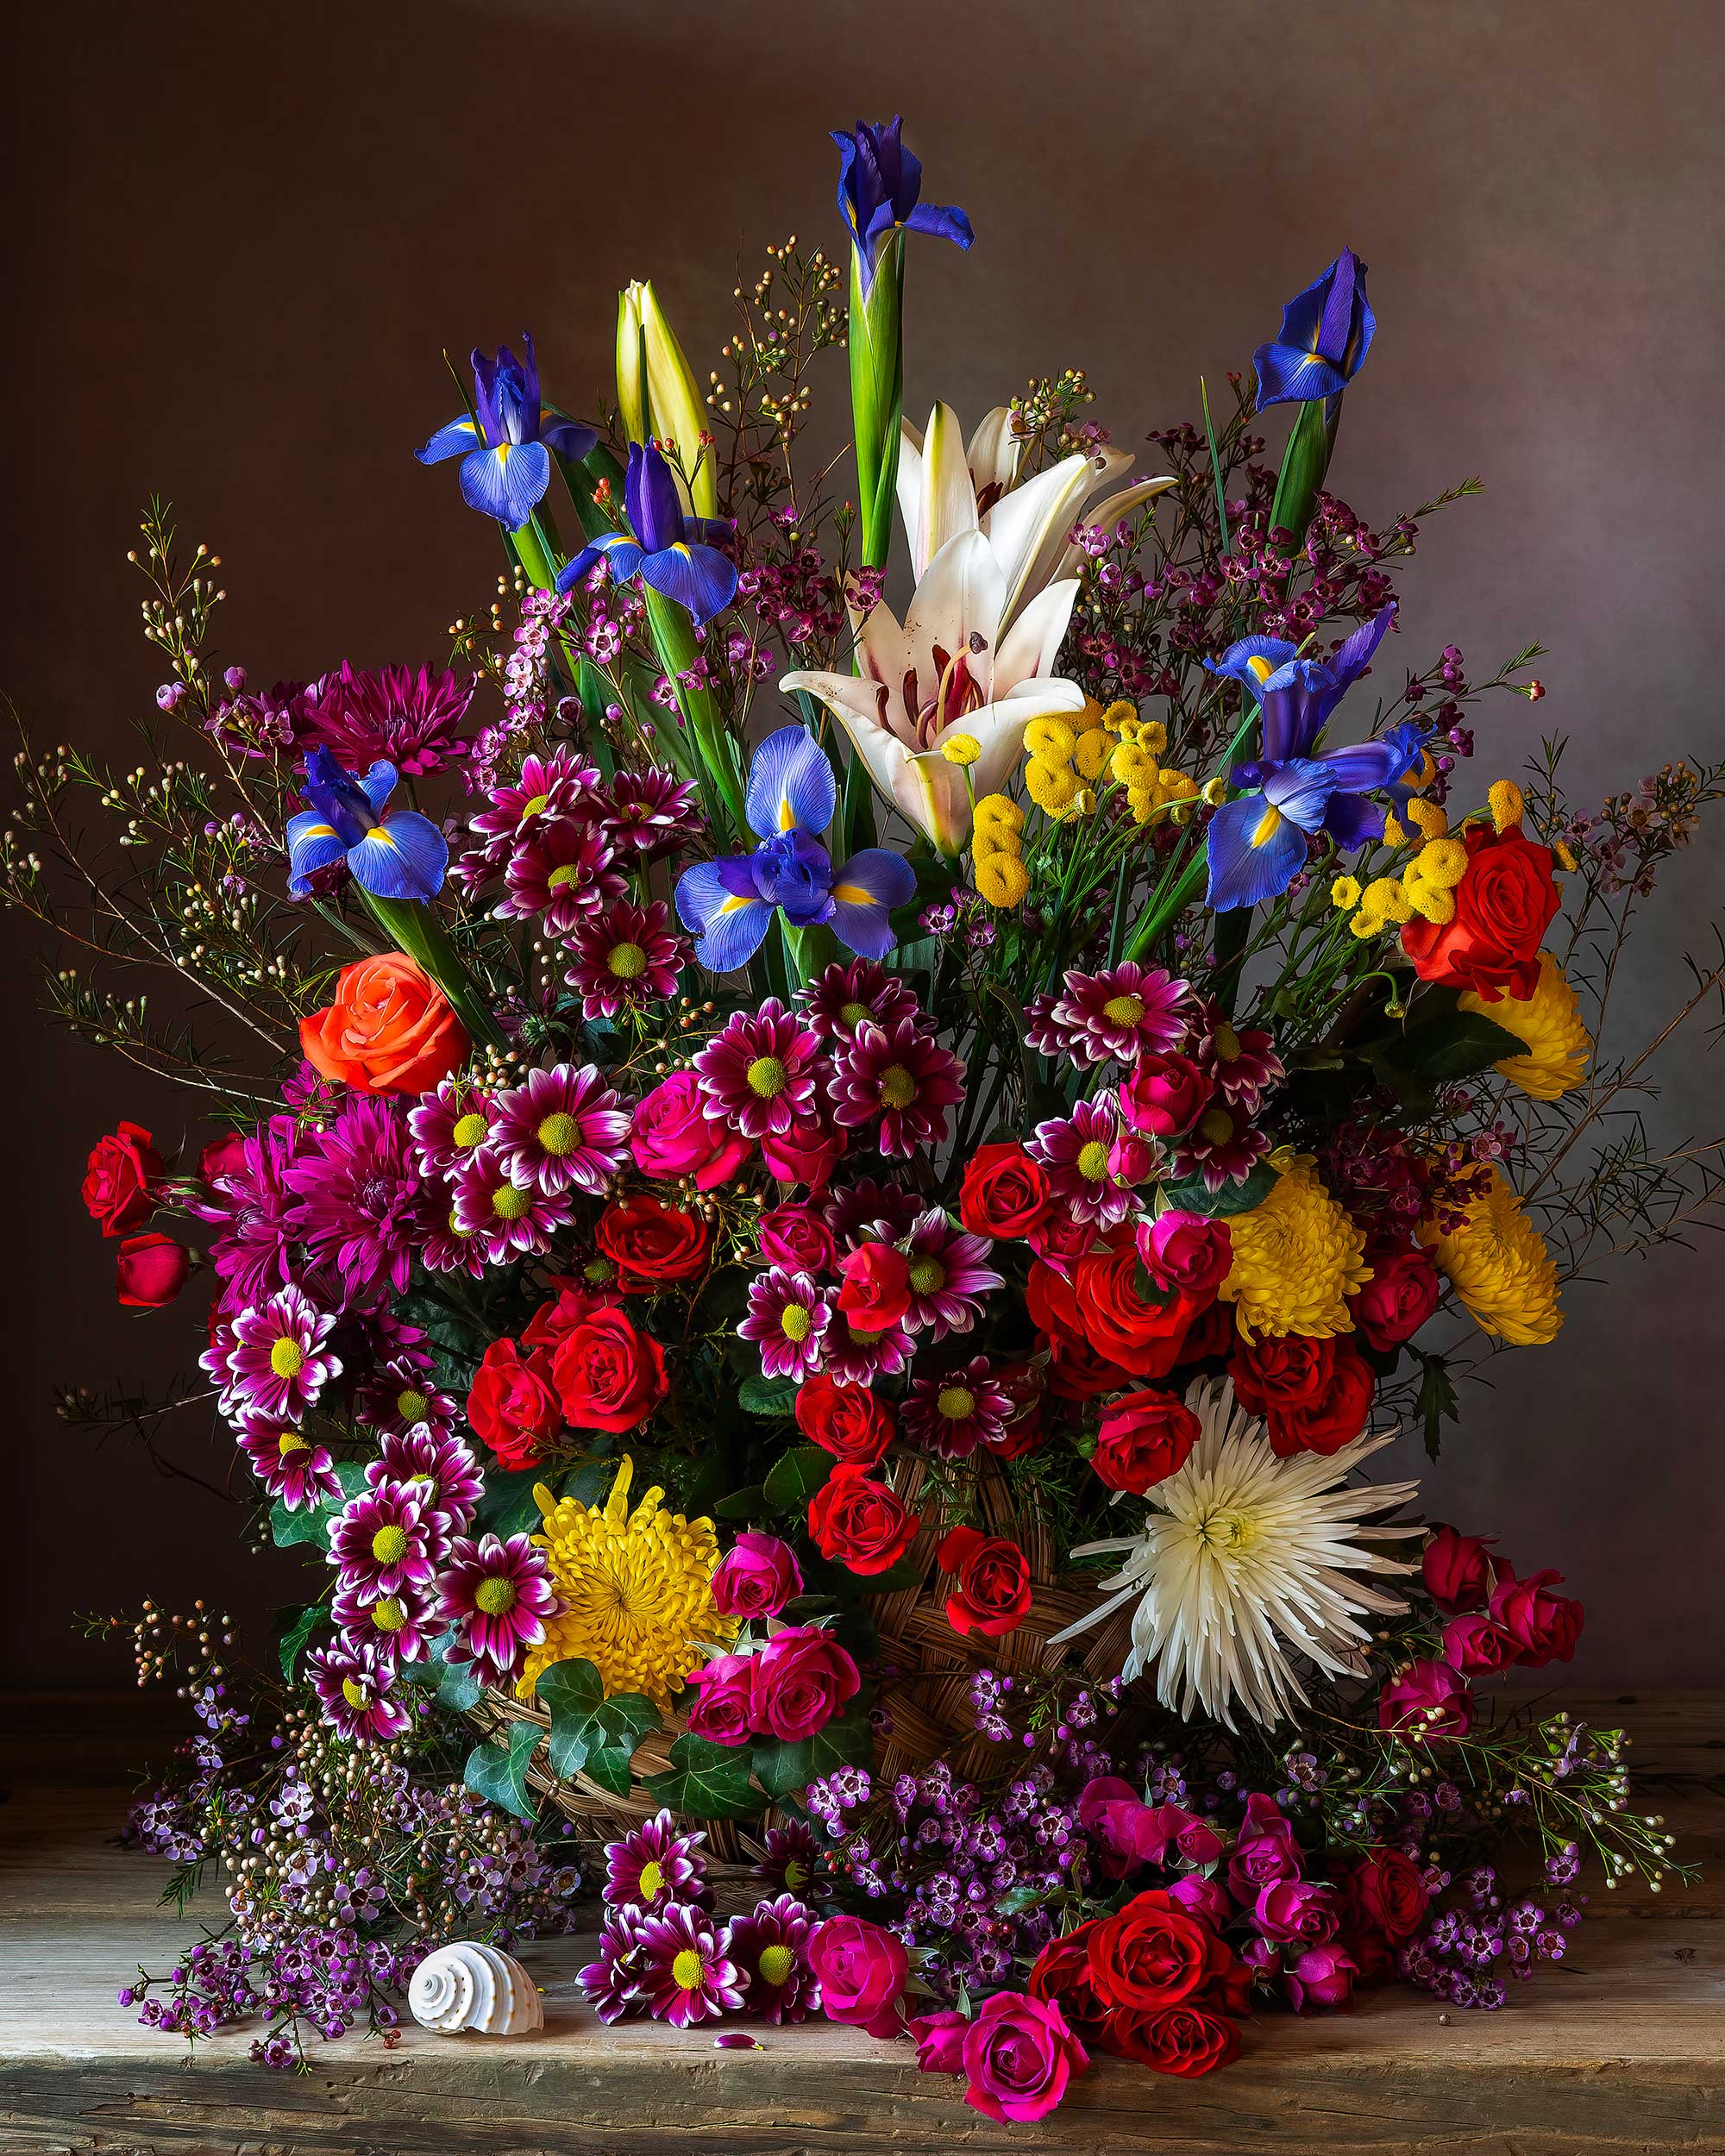 irisis, lilies, mumms, roses, wild flowers, spring blooms, vabrant, still life photography, Слуцкая Яна